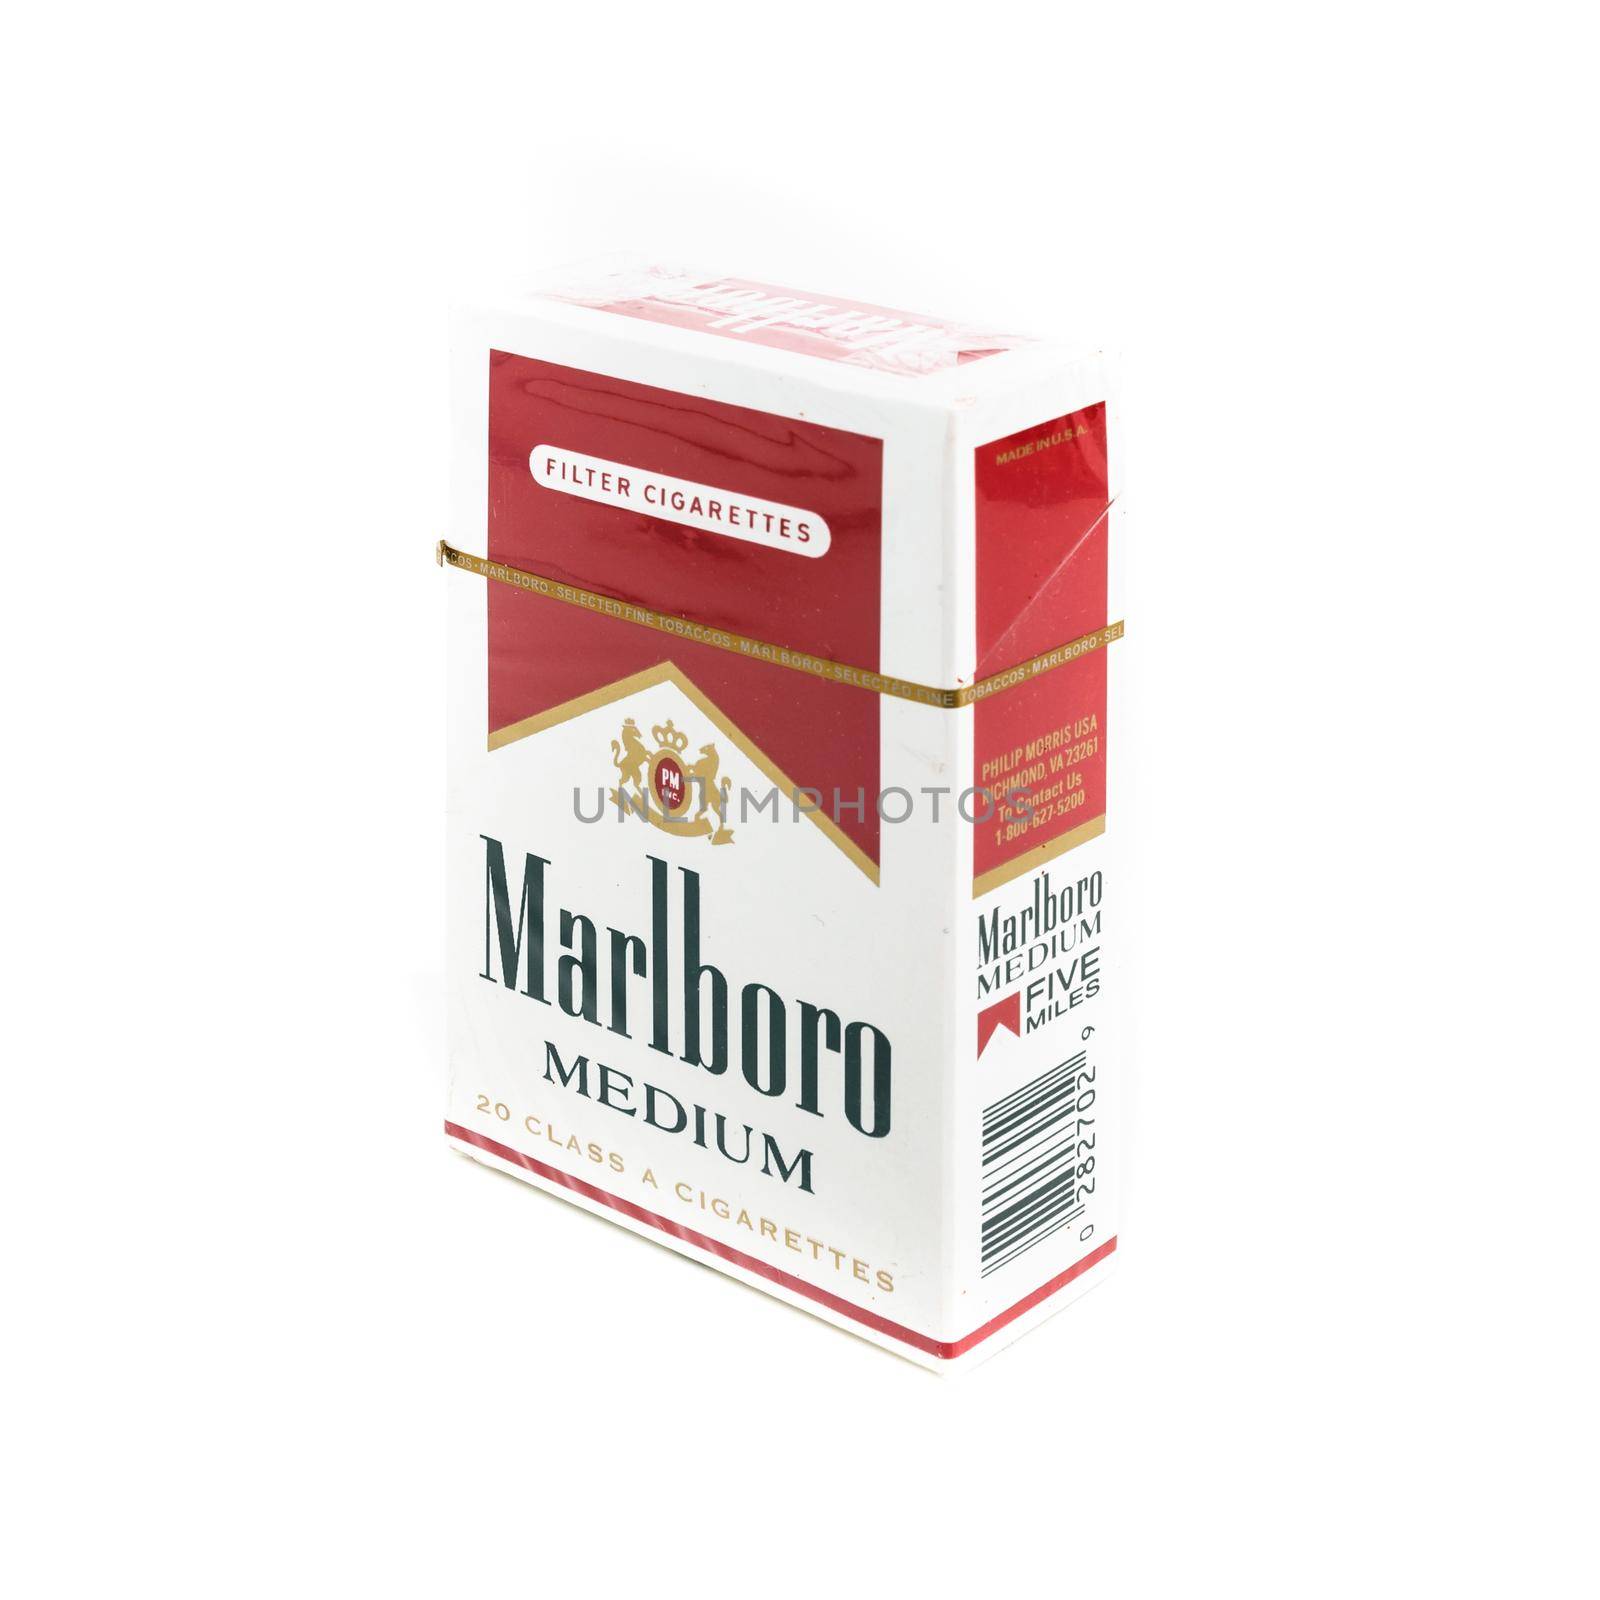 Pack of Marlboro Medium Cigarettes by germanopoli